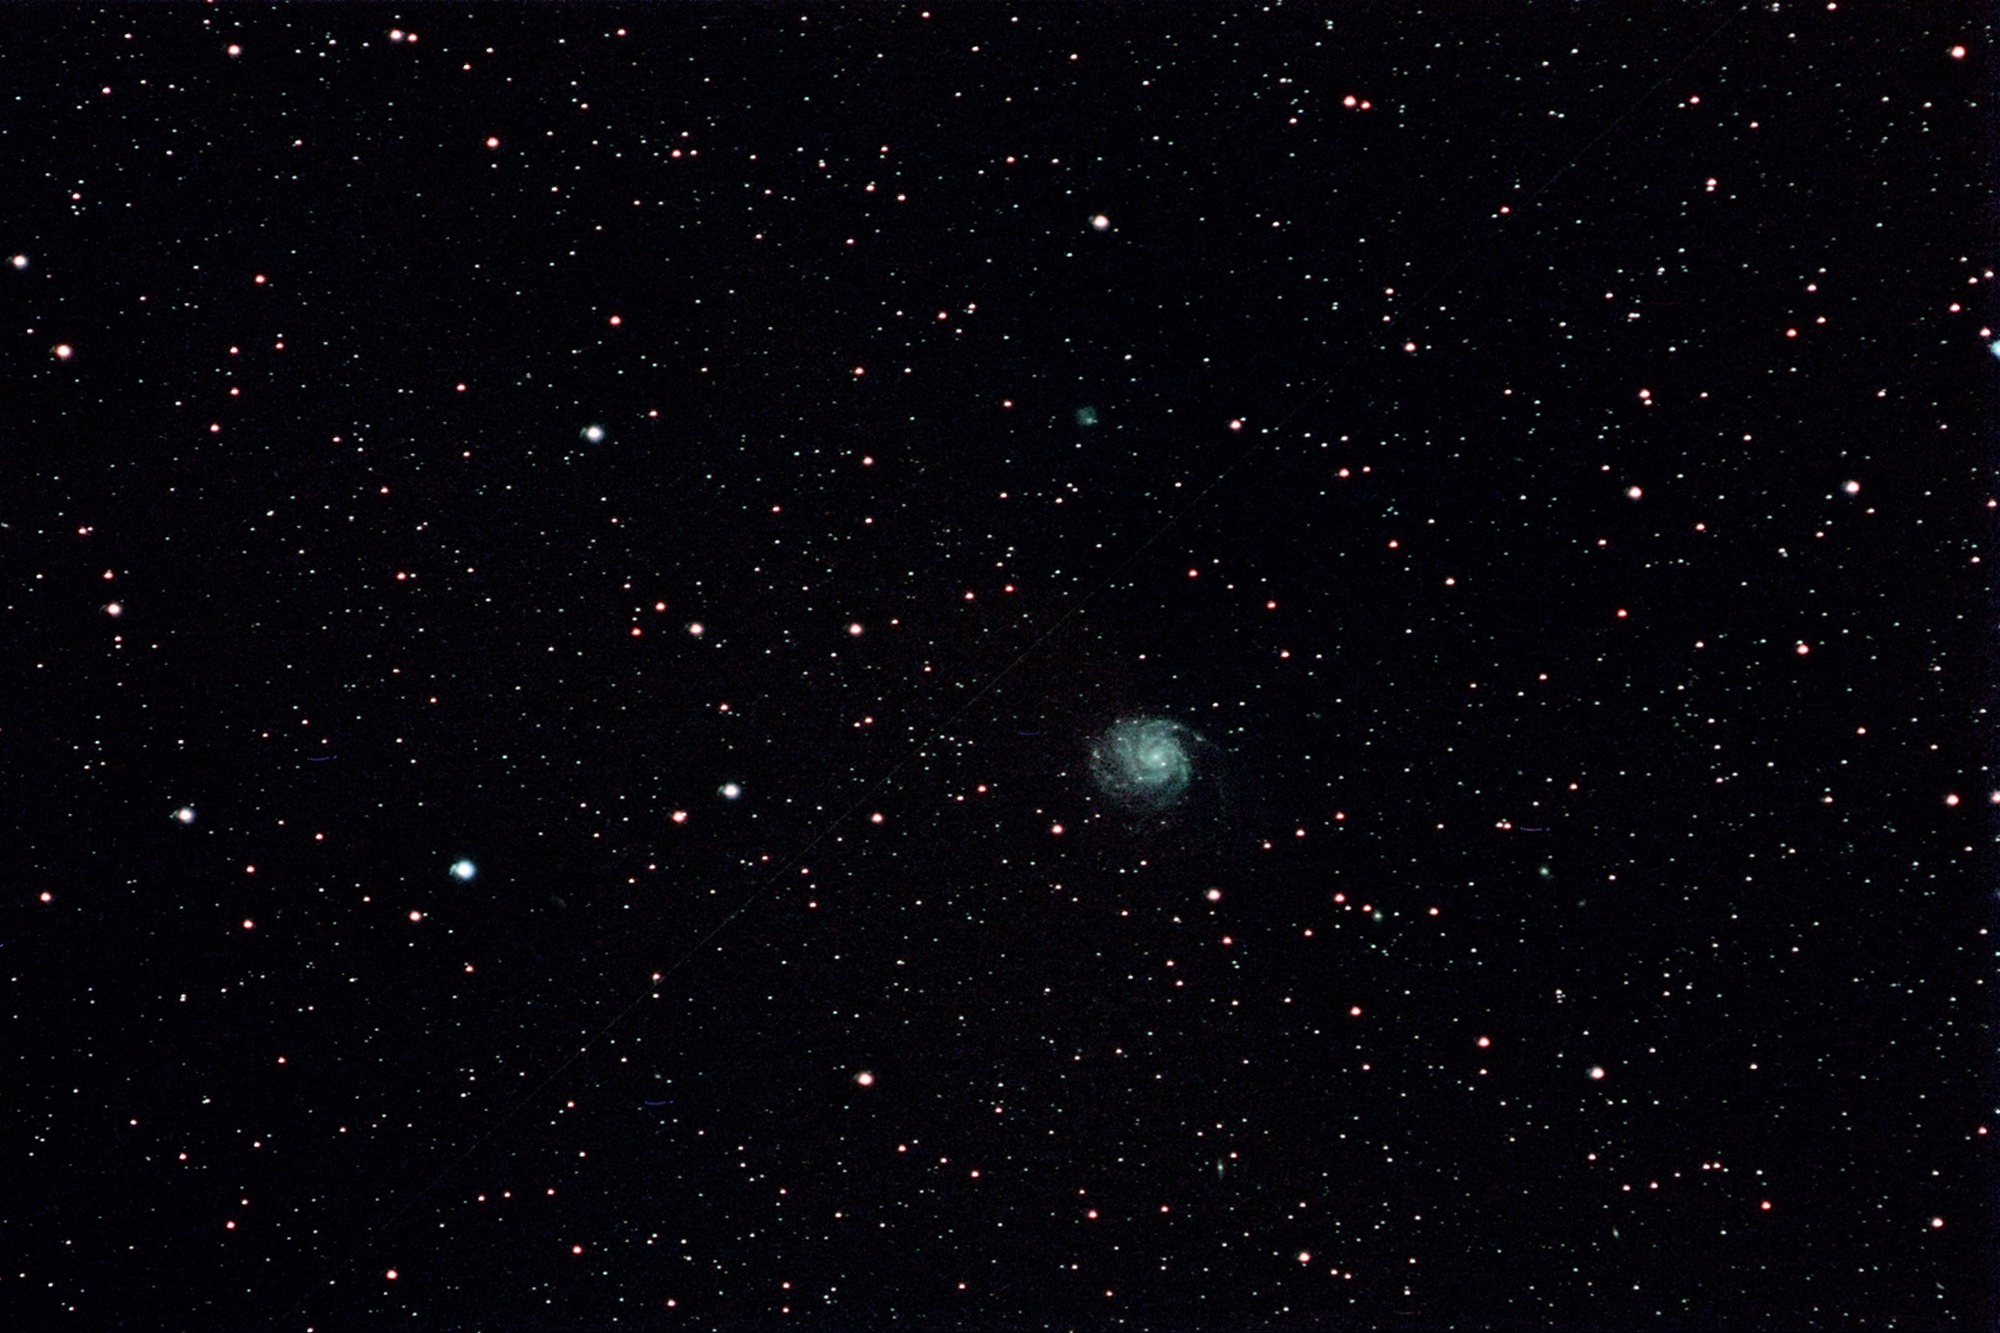 M101_10x360sec_iso1600_pentacon300mm